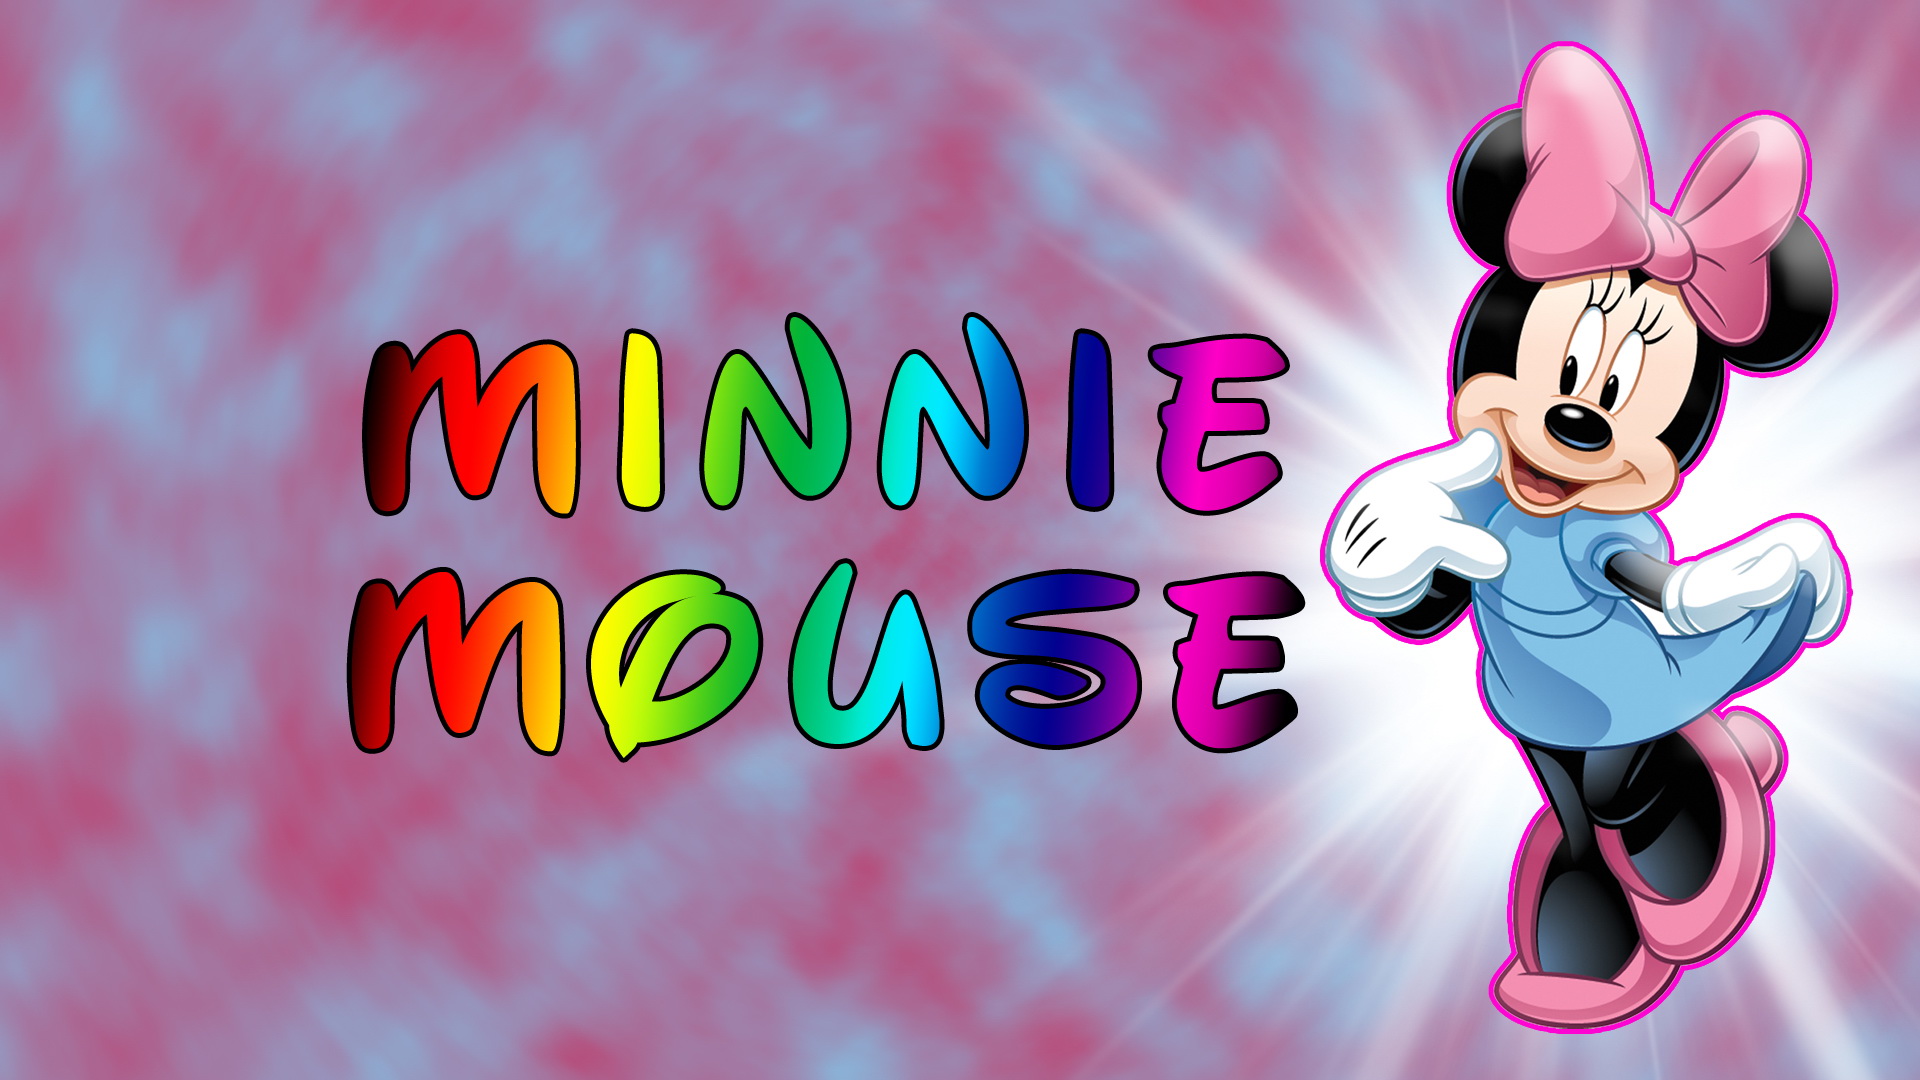 wallpaper de minnie,cartoon,animated cartoon,pink,text,happy